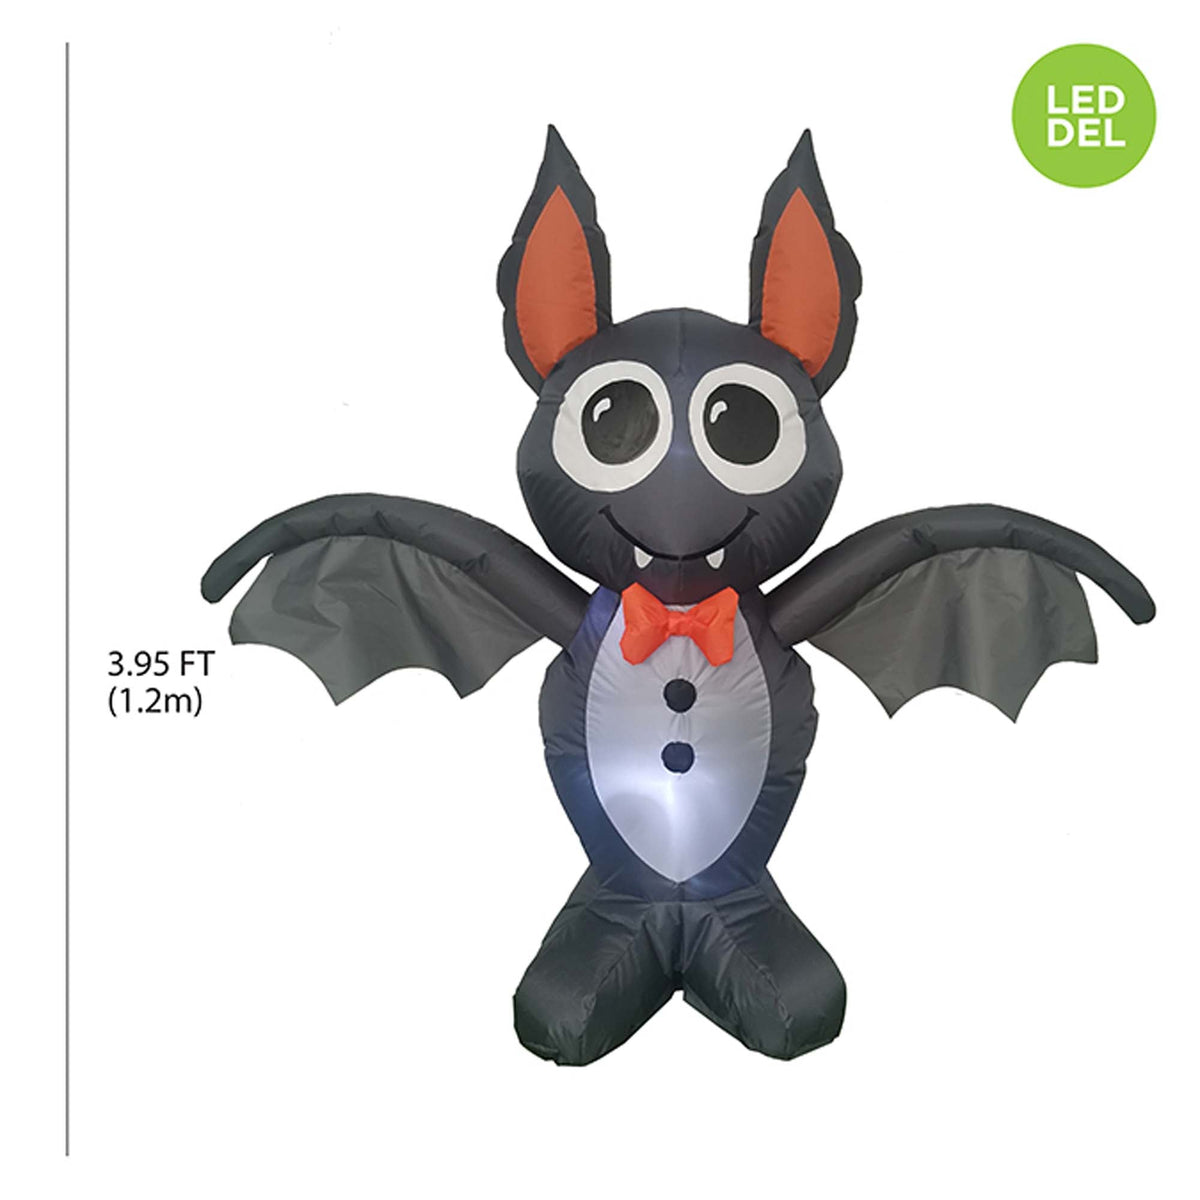 DANSON DECOR Halloween Inflatable Light-Up Bat Decoration, 47 Inches, 1 Count